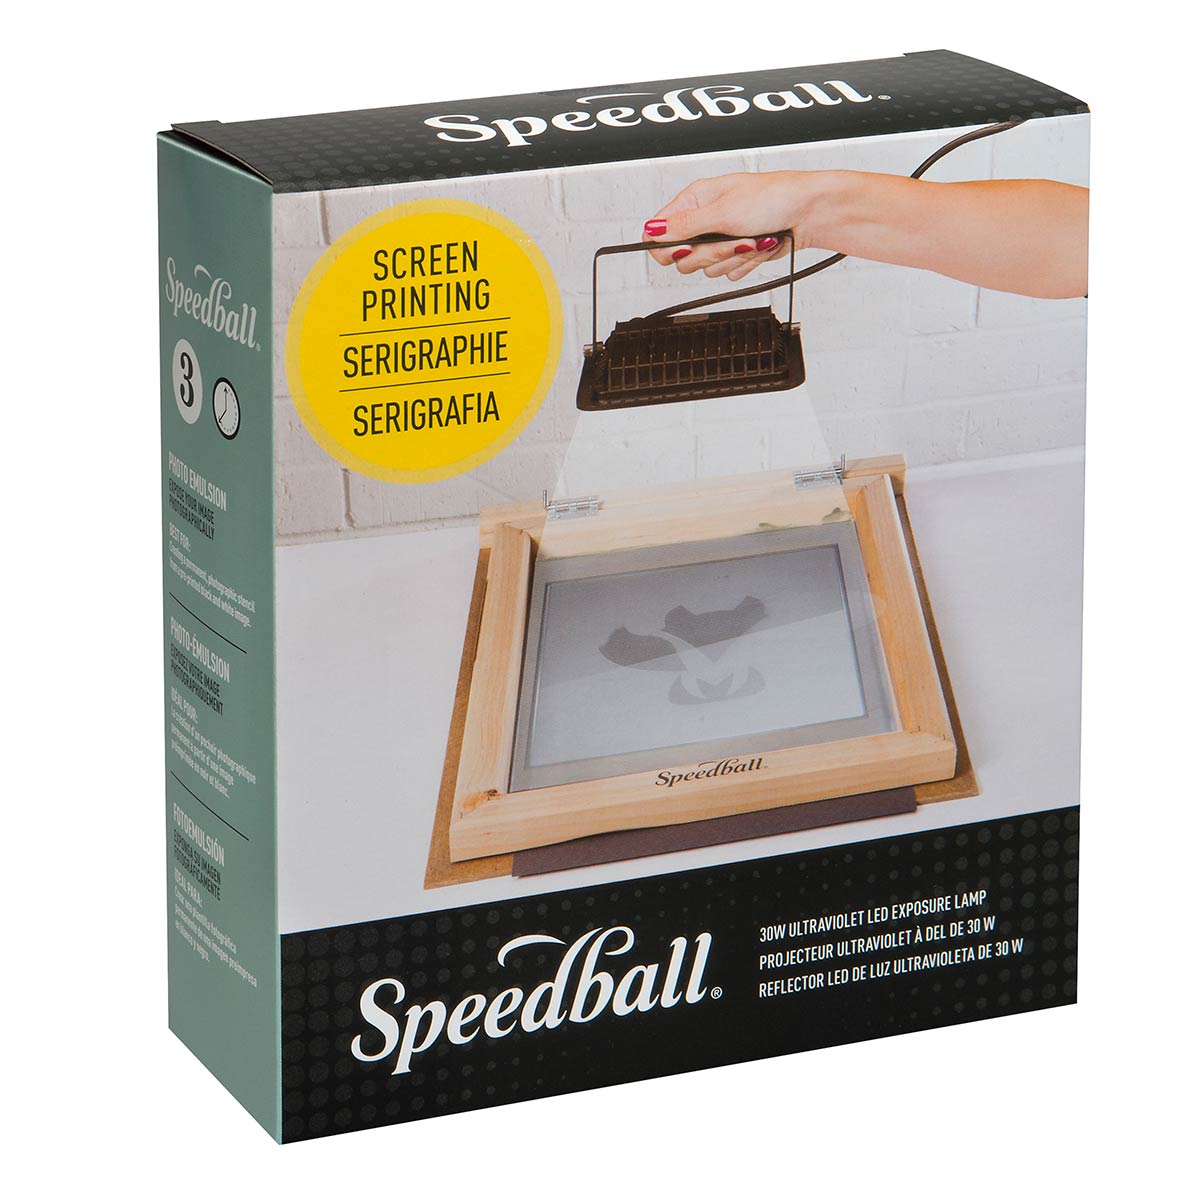 Speedball - LED Exposure Lamp for Screen Printing